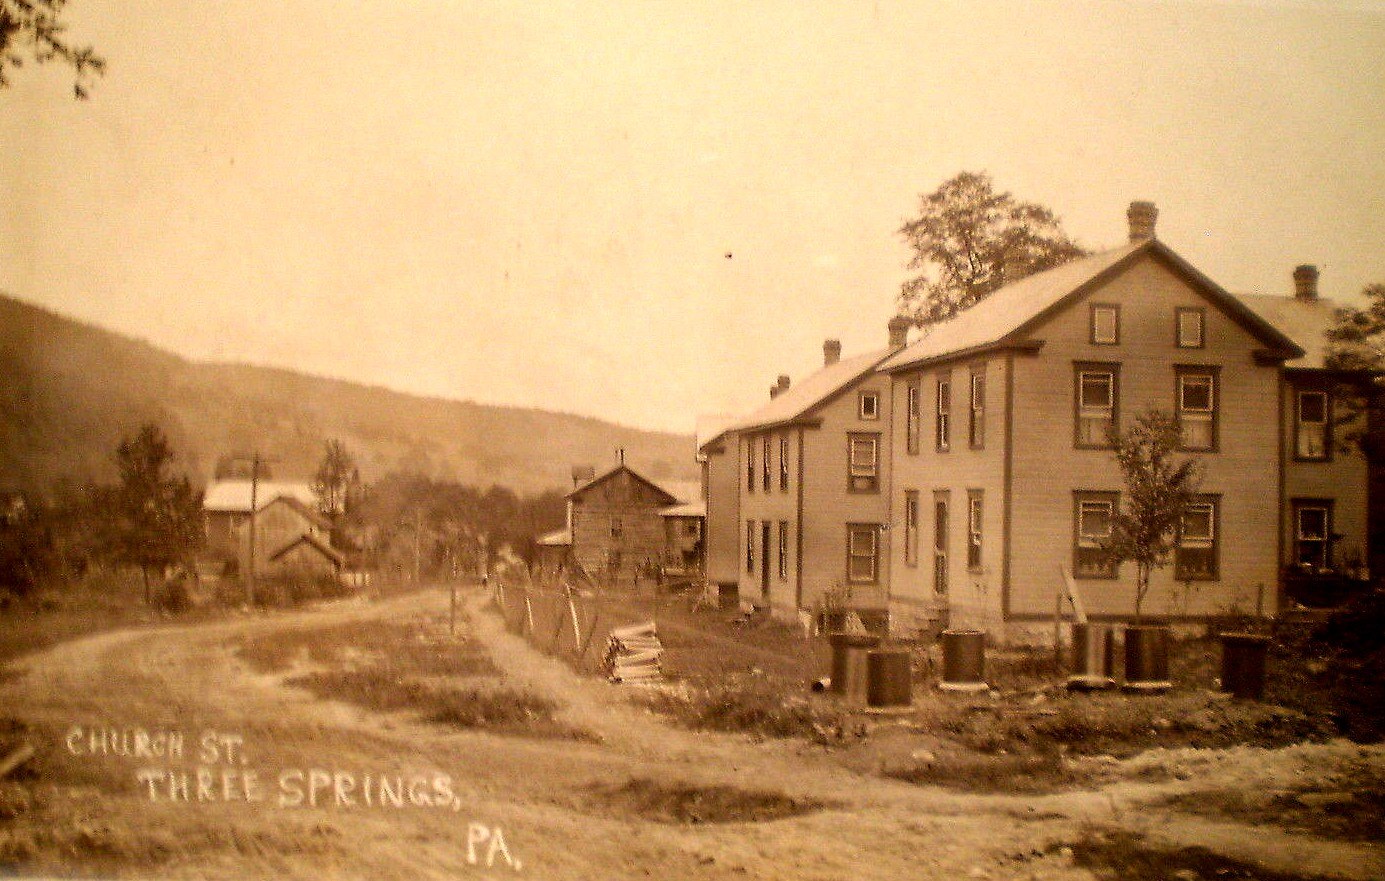 Church Street Three Springs